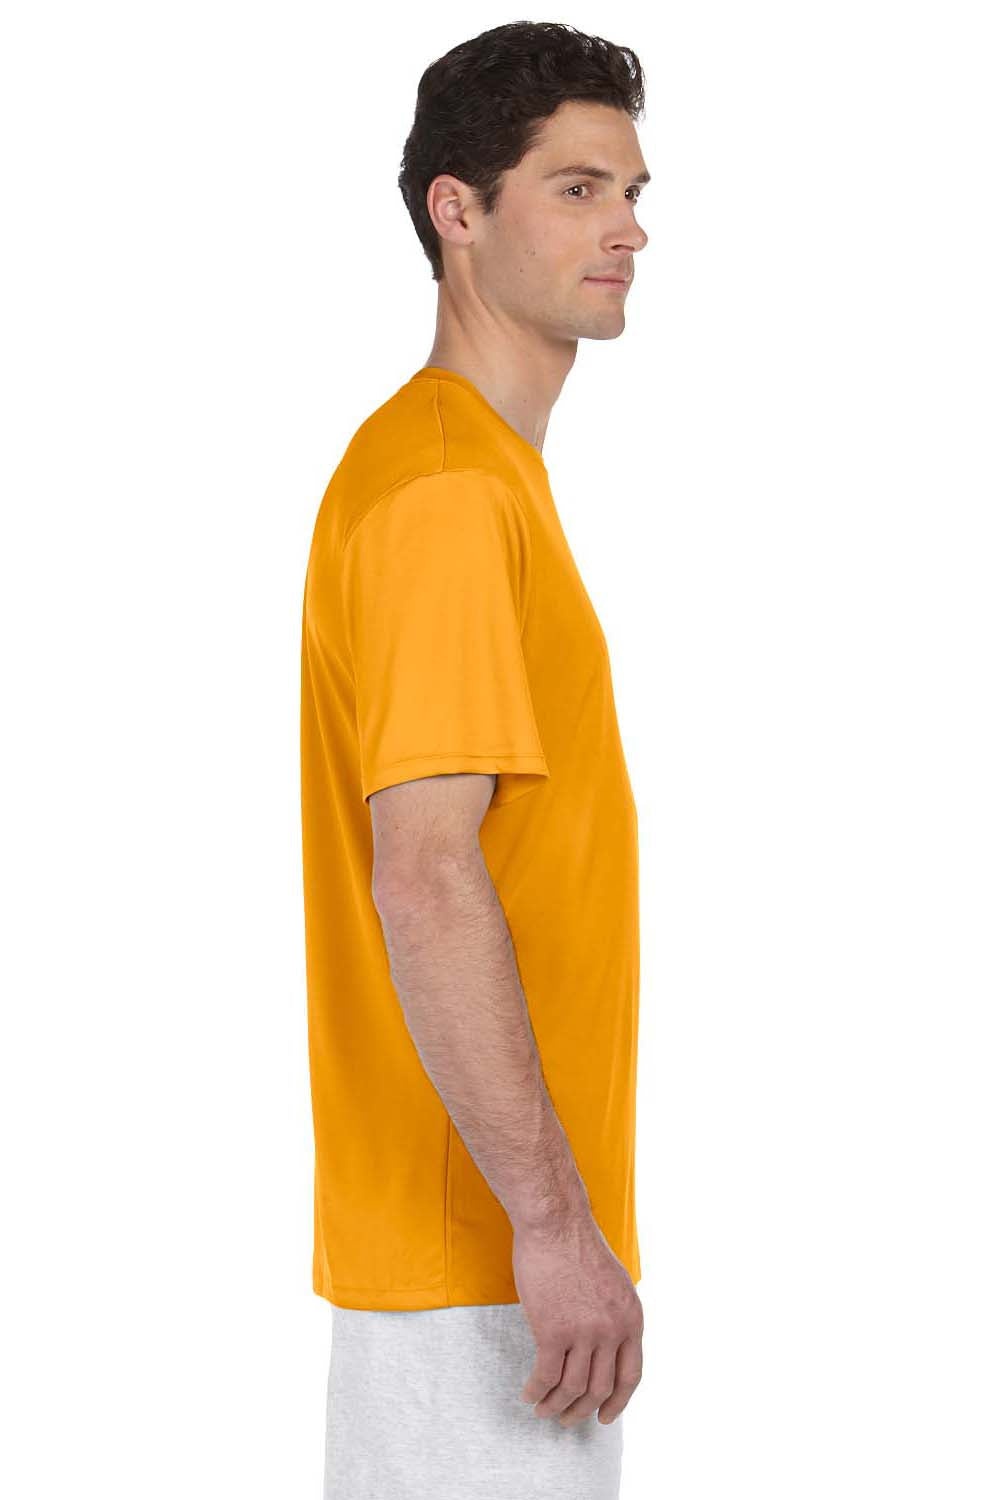 Hanes 4820 Mens Cool DRI FreshIQ Moisture Wicking Short Sleeve Crewneck T-Shirt Safety Orange Side